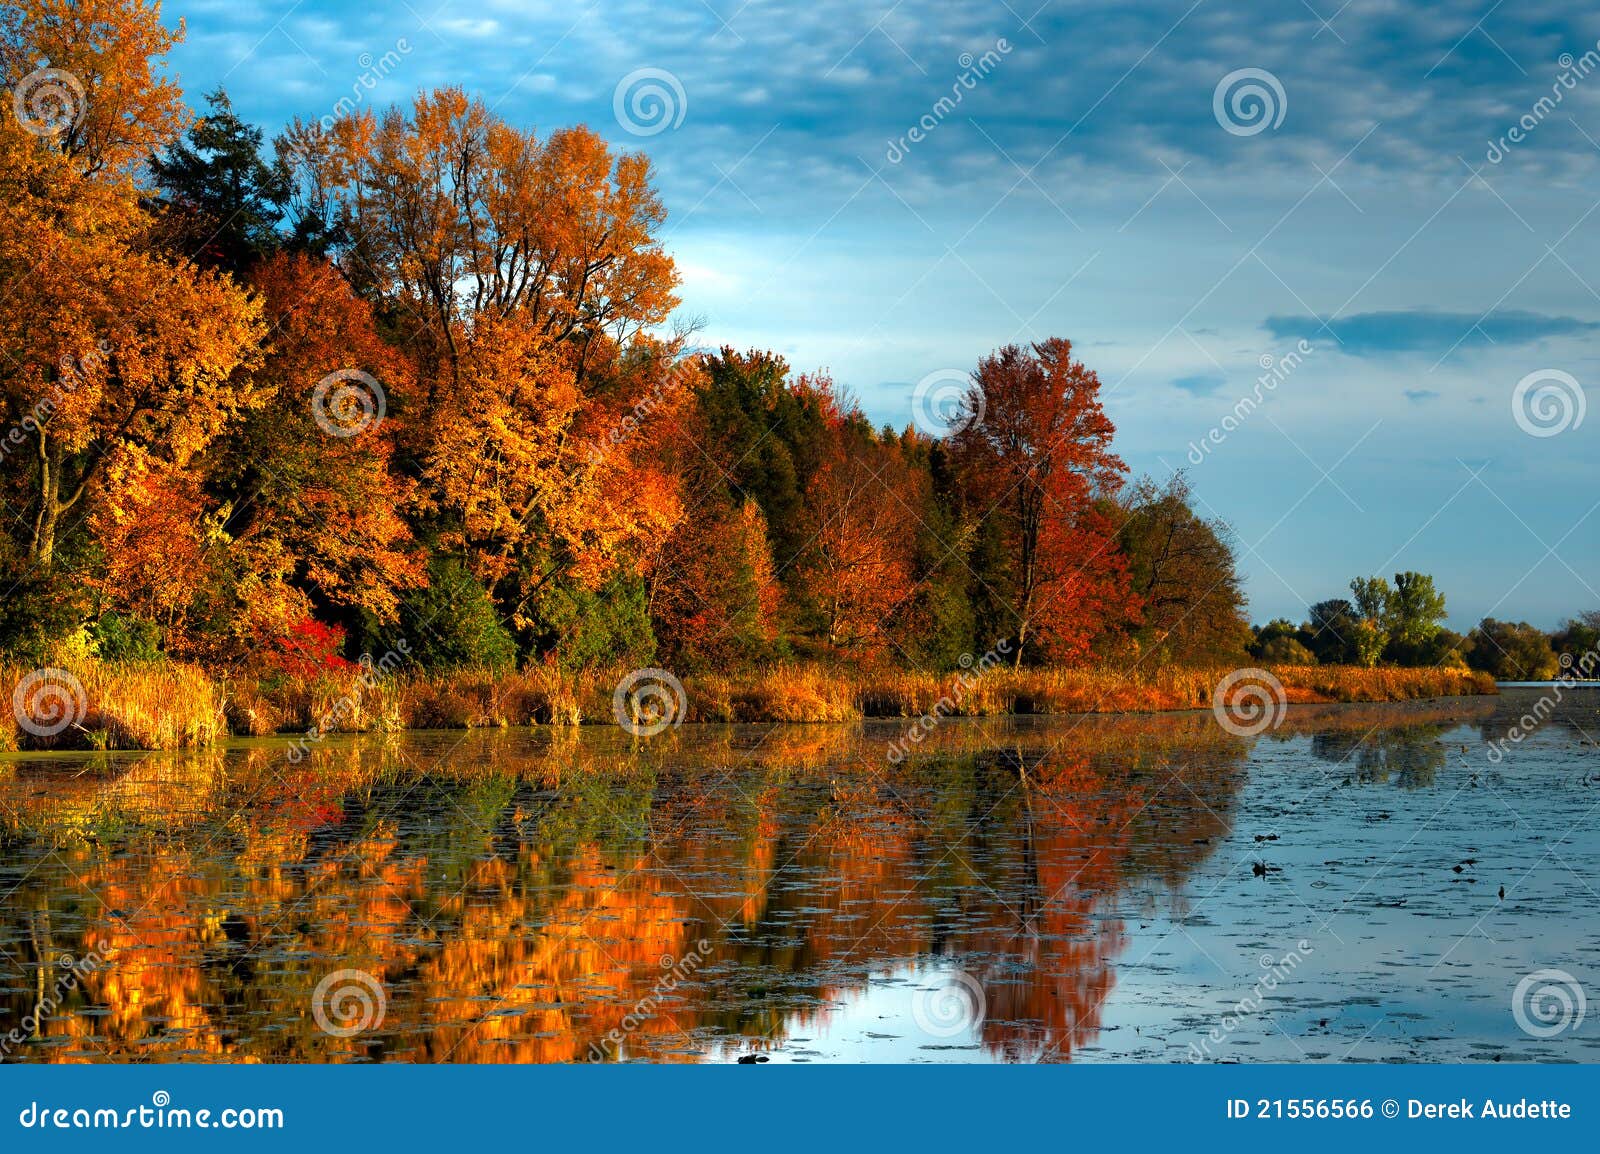 HDR Autumn Forest on Waterfront Stock Photo - Image of foliage, habitat ...